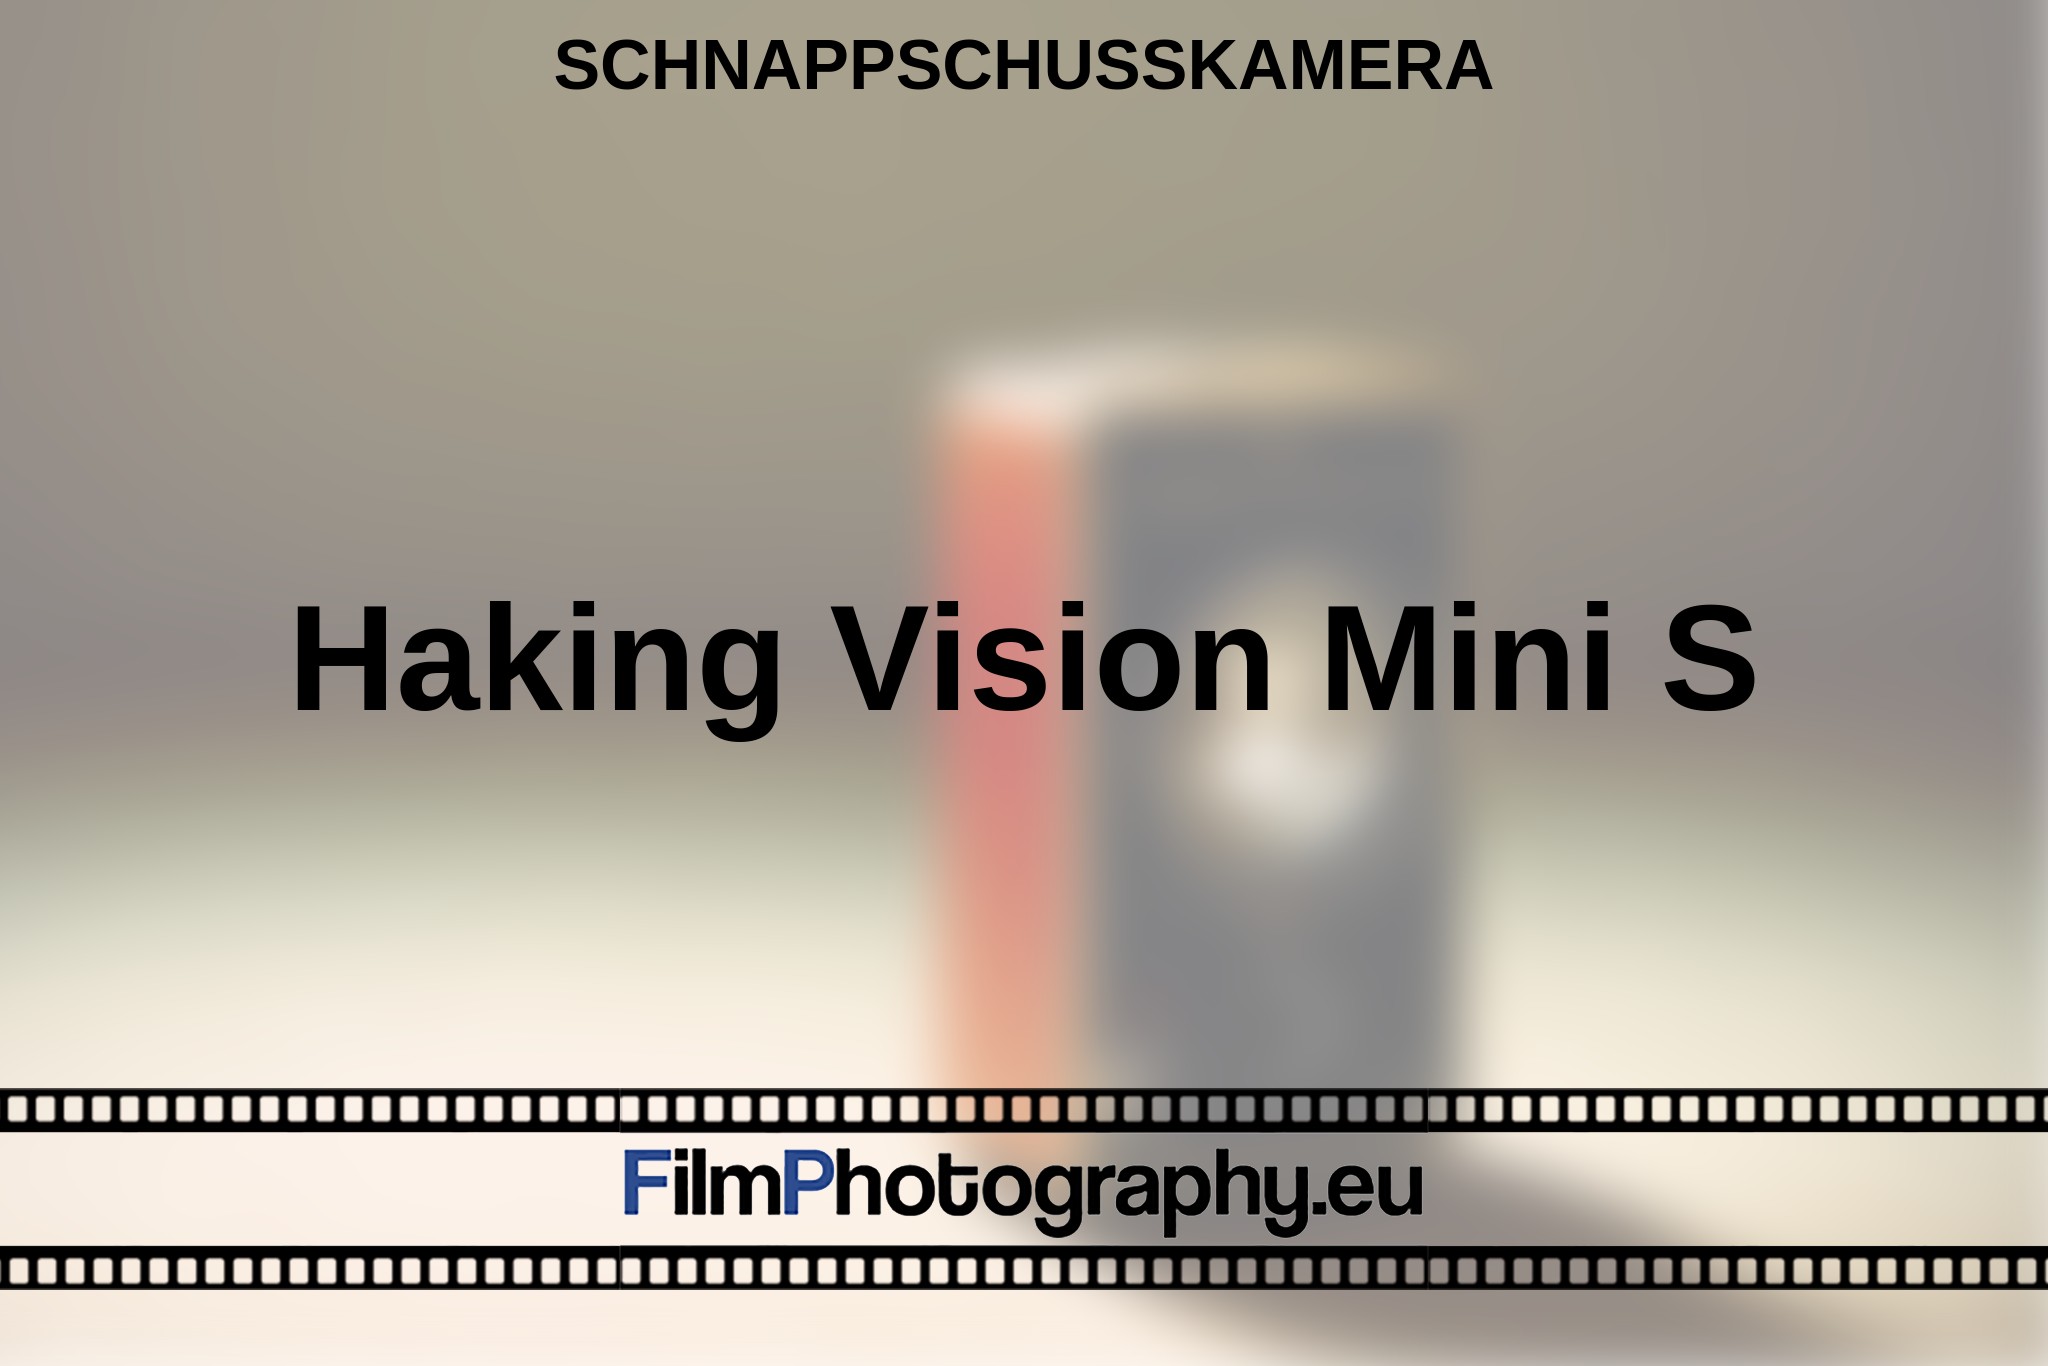 haking-vision-mini-s-schnappschusskamera-bnv.jpg